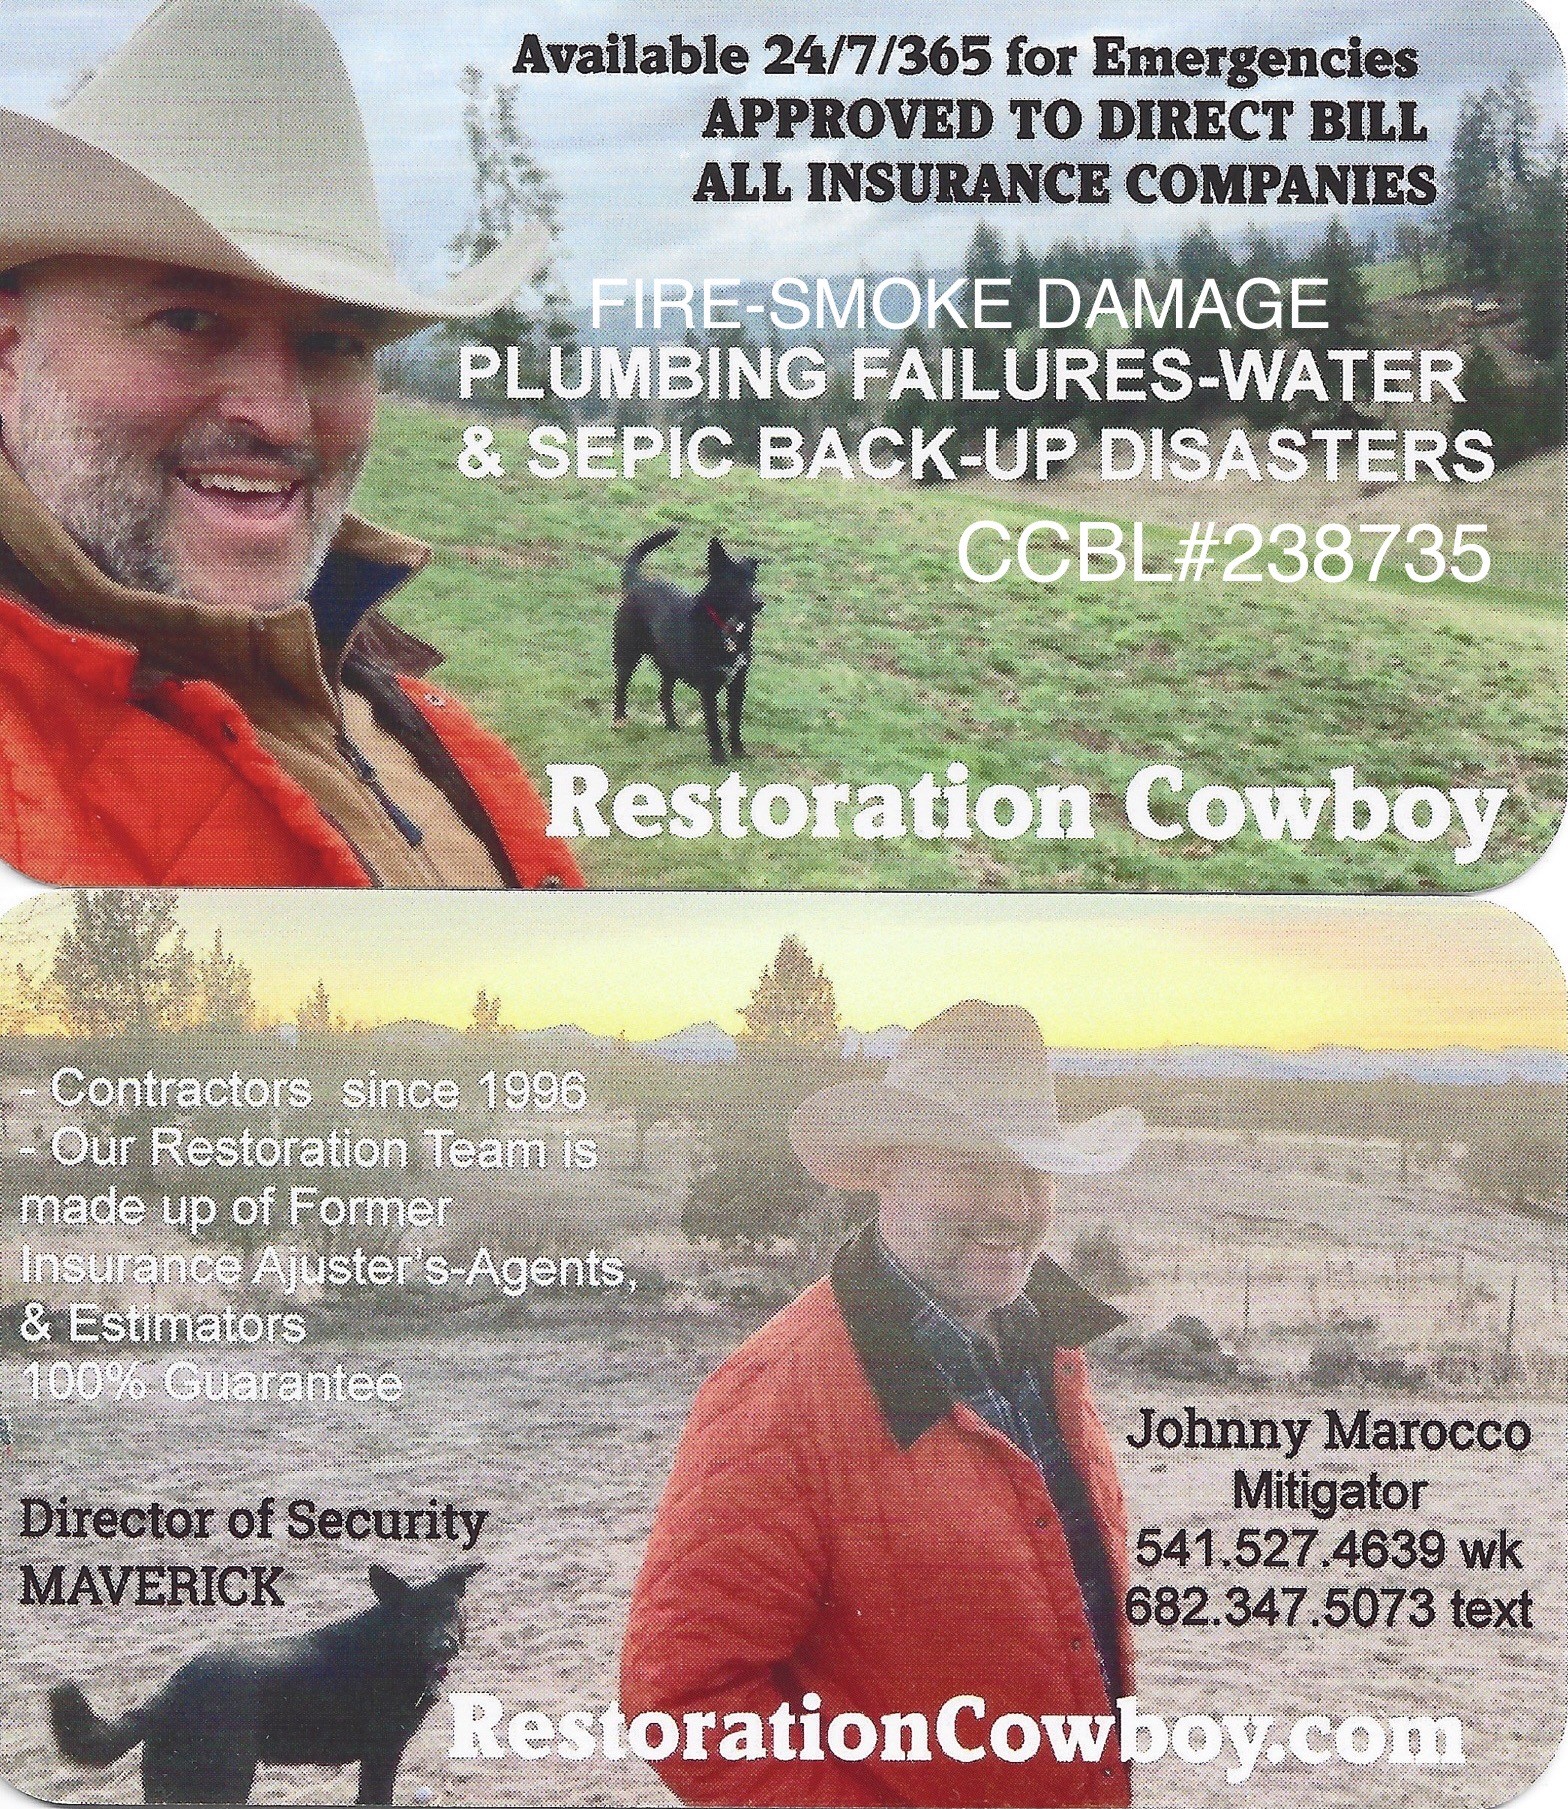 Restoration Cowboy 800 Long St, Sweet Home Oregon 97386